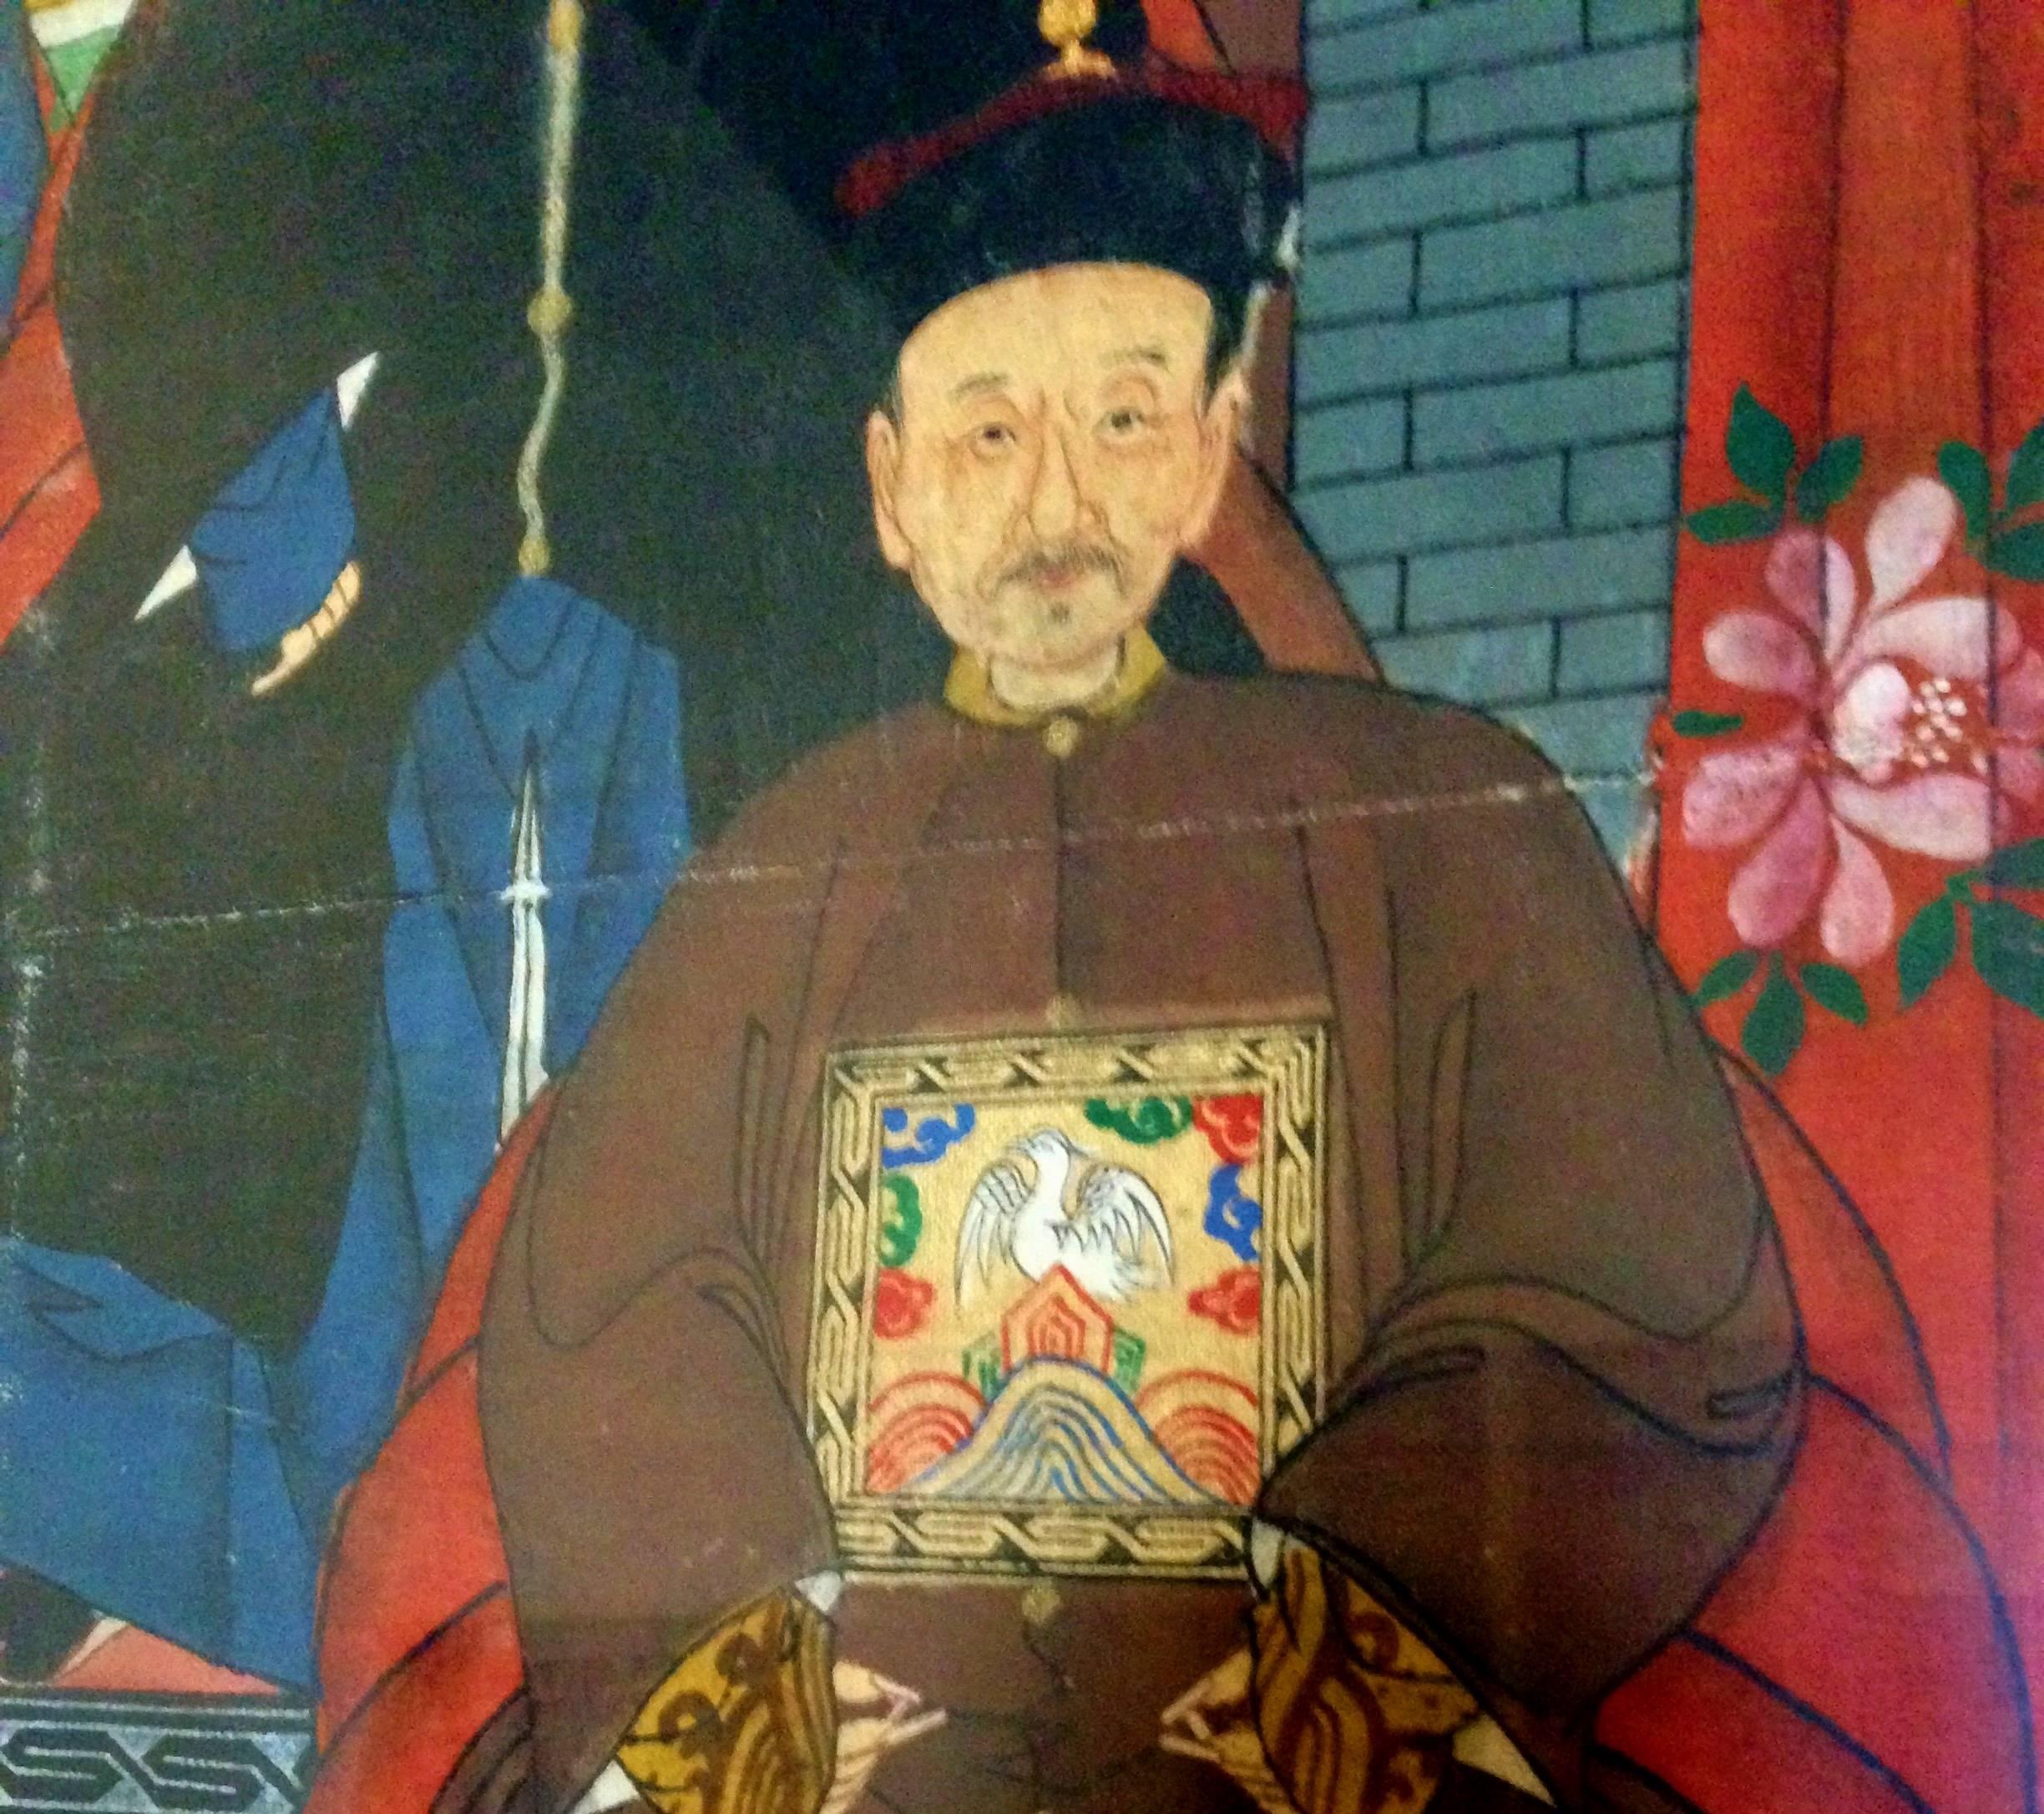 Qing Antique Chinese Ancestor's Portrait